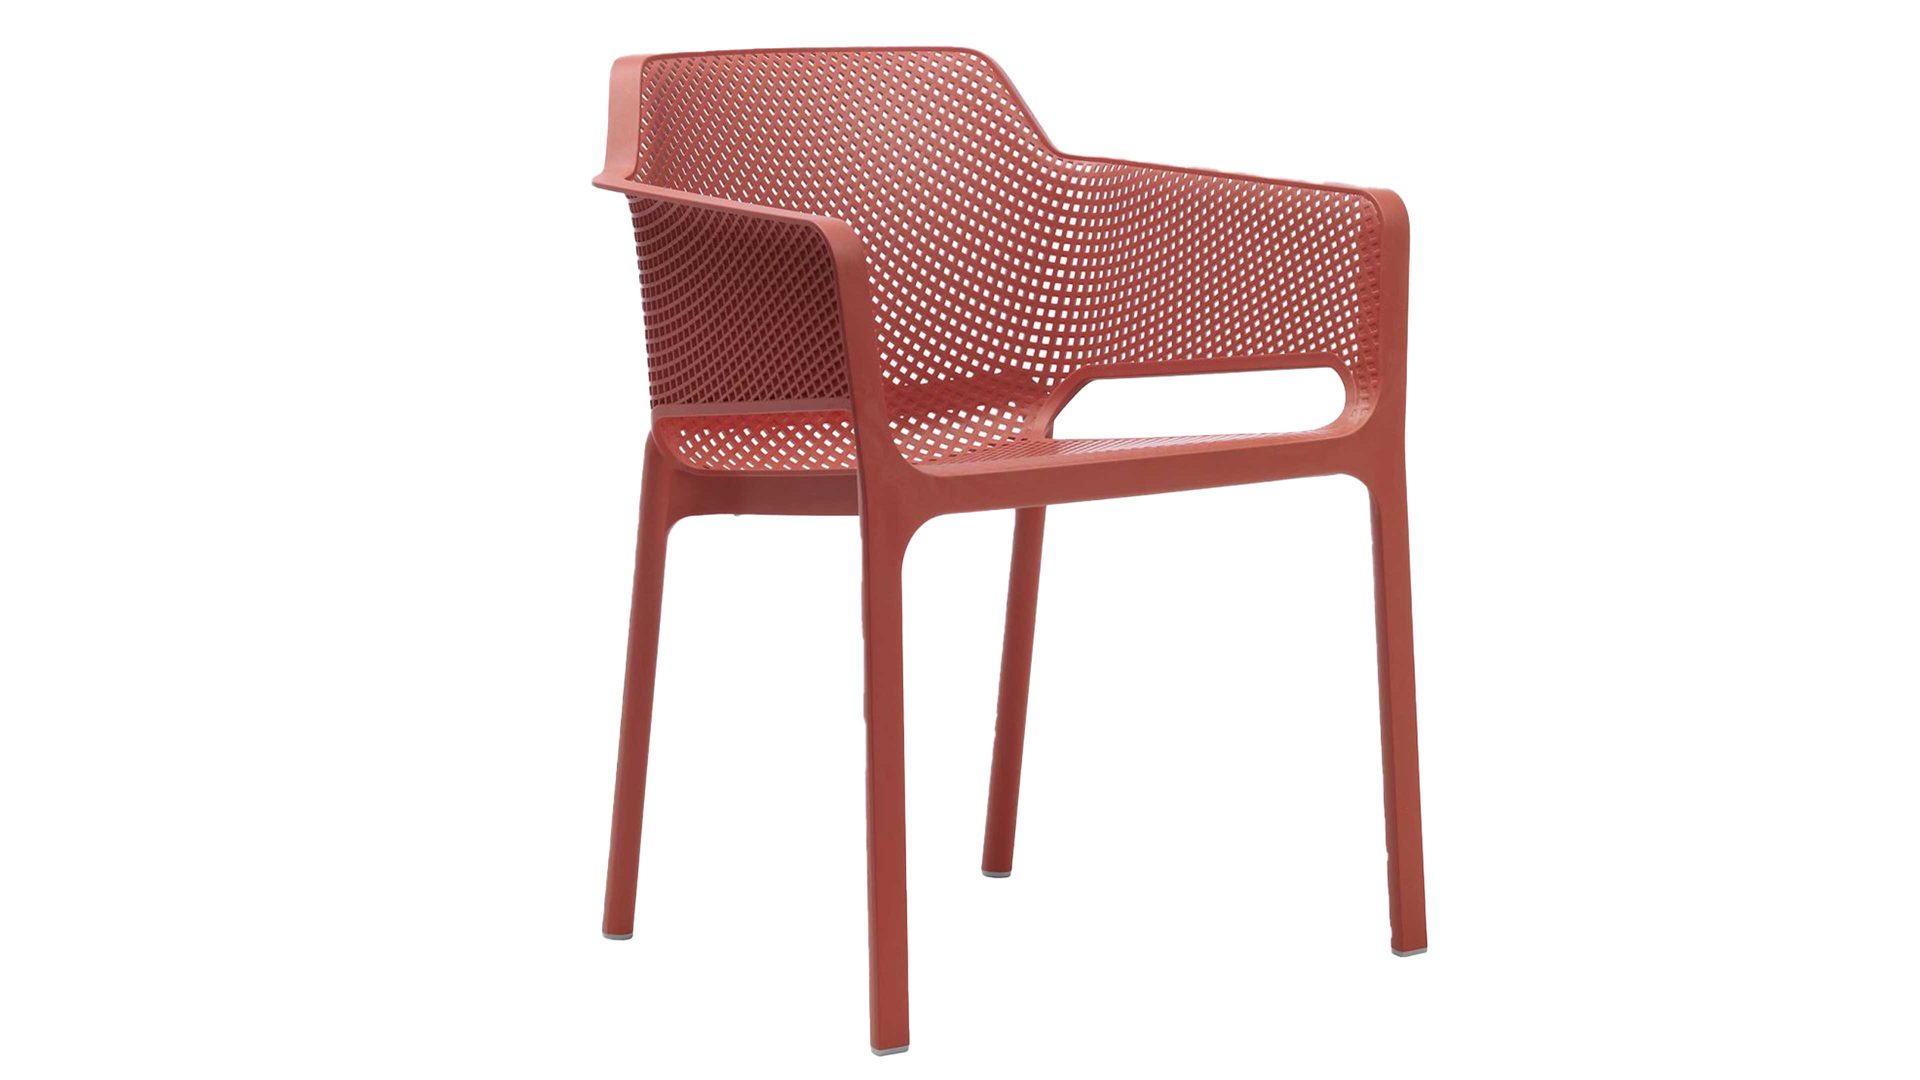 Gartenstuhl /-sessel Best freizeitmöbel aus Kunststoff in Rot BEST FREIZEITMÖBEL Stapelsessel Ohio korallenfarbener Fiberglas-Kunststoff